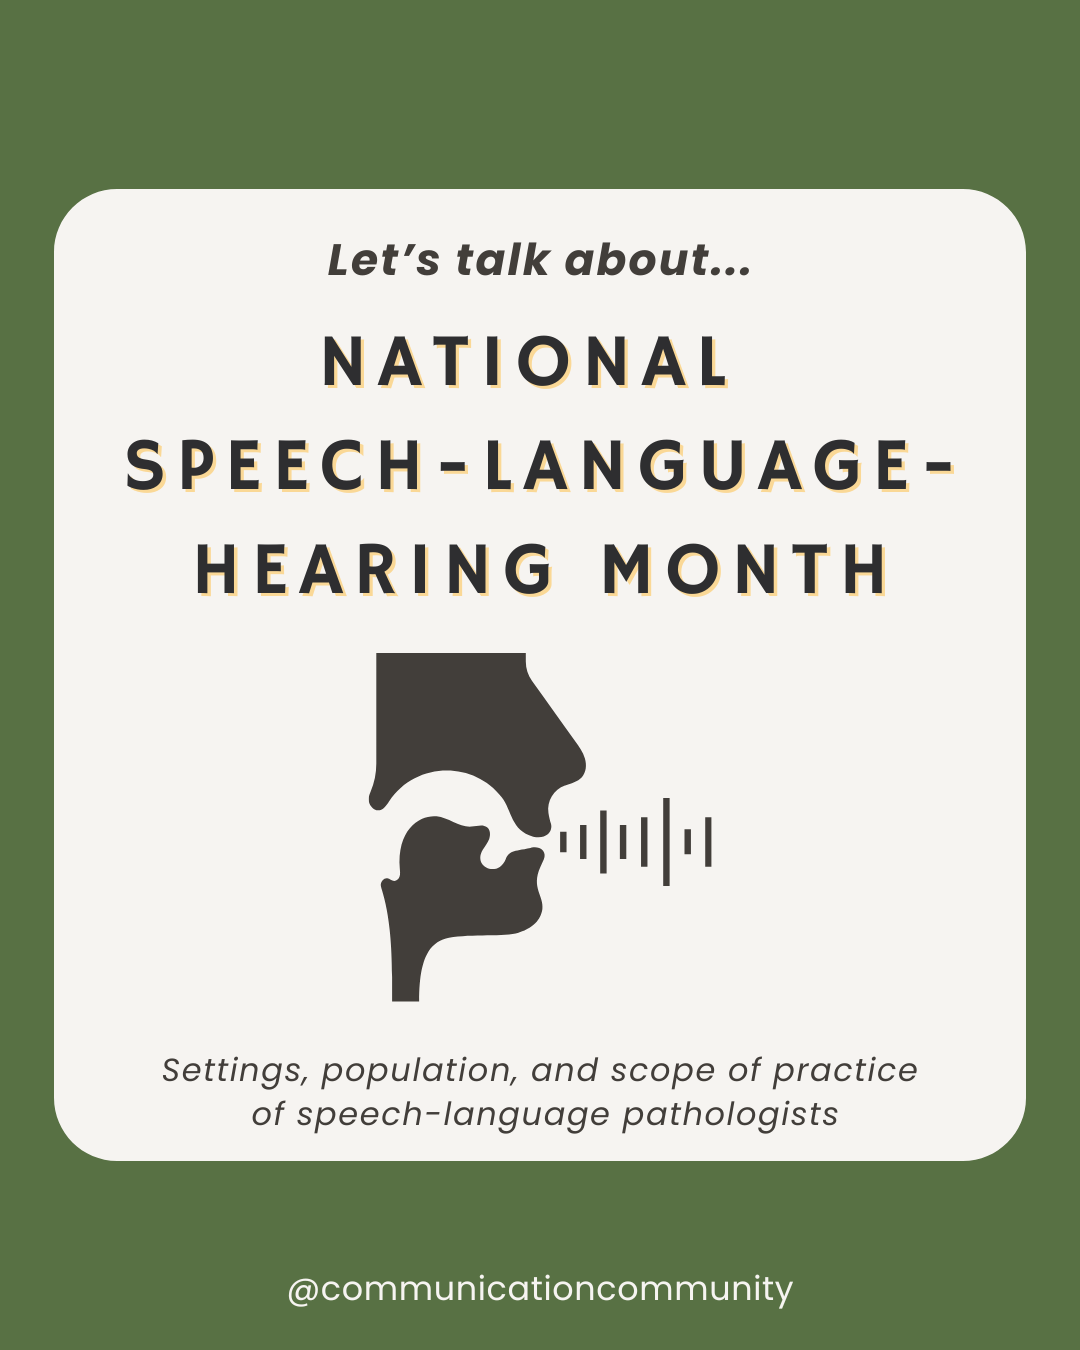 National Speech-Language-Hearing Month | What Does a Speech-Language Pathologist Do?